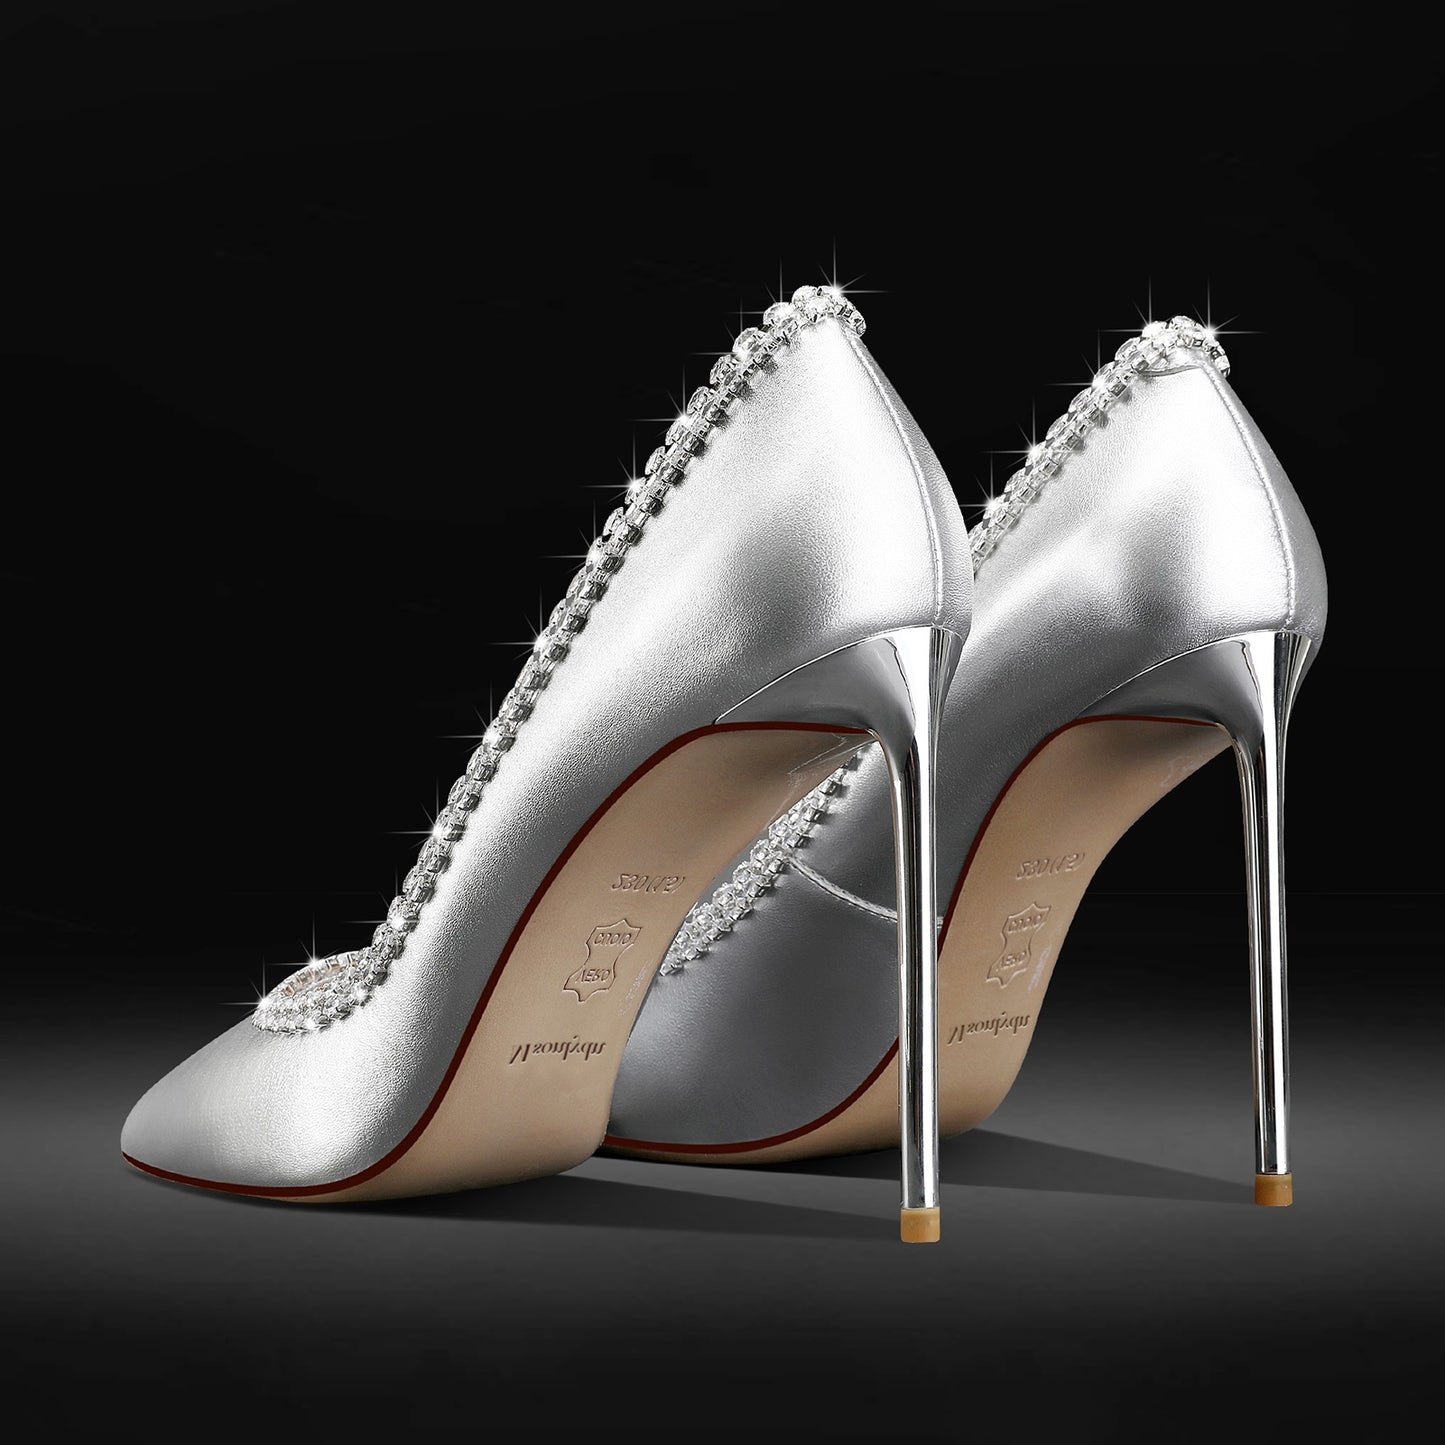 Stylish & Comfortable High Heel Stiletto Pumps for Women -  Leather Dress Pumps Heels